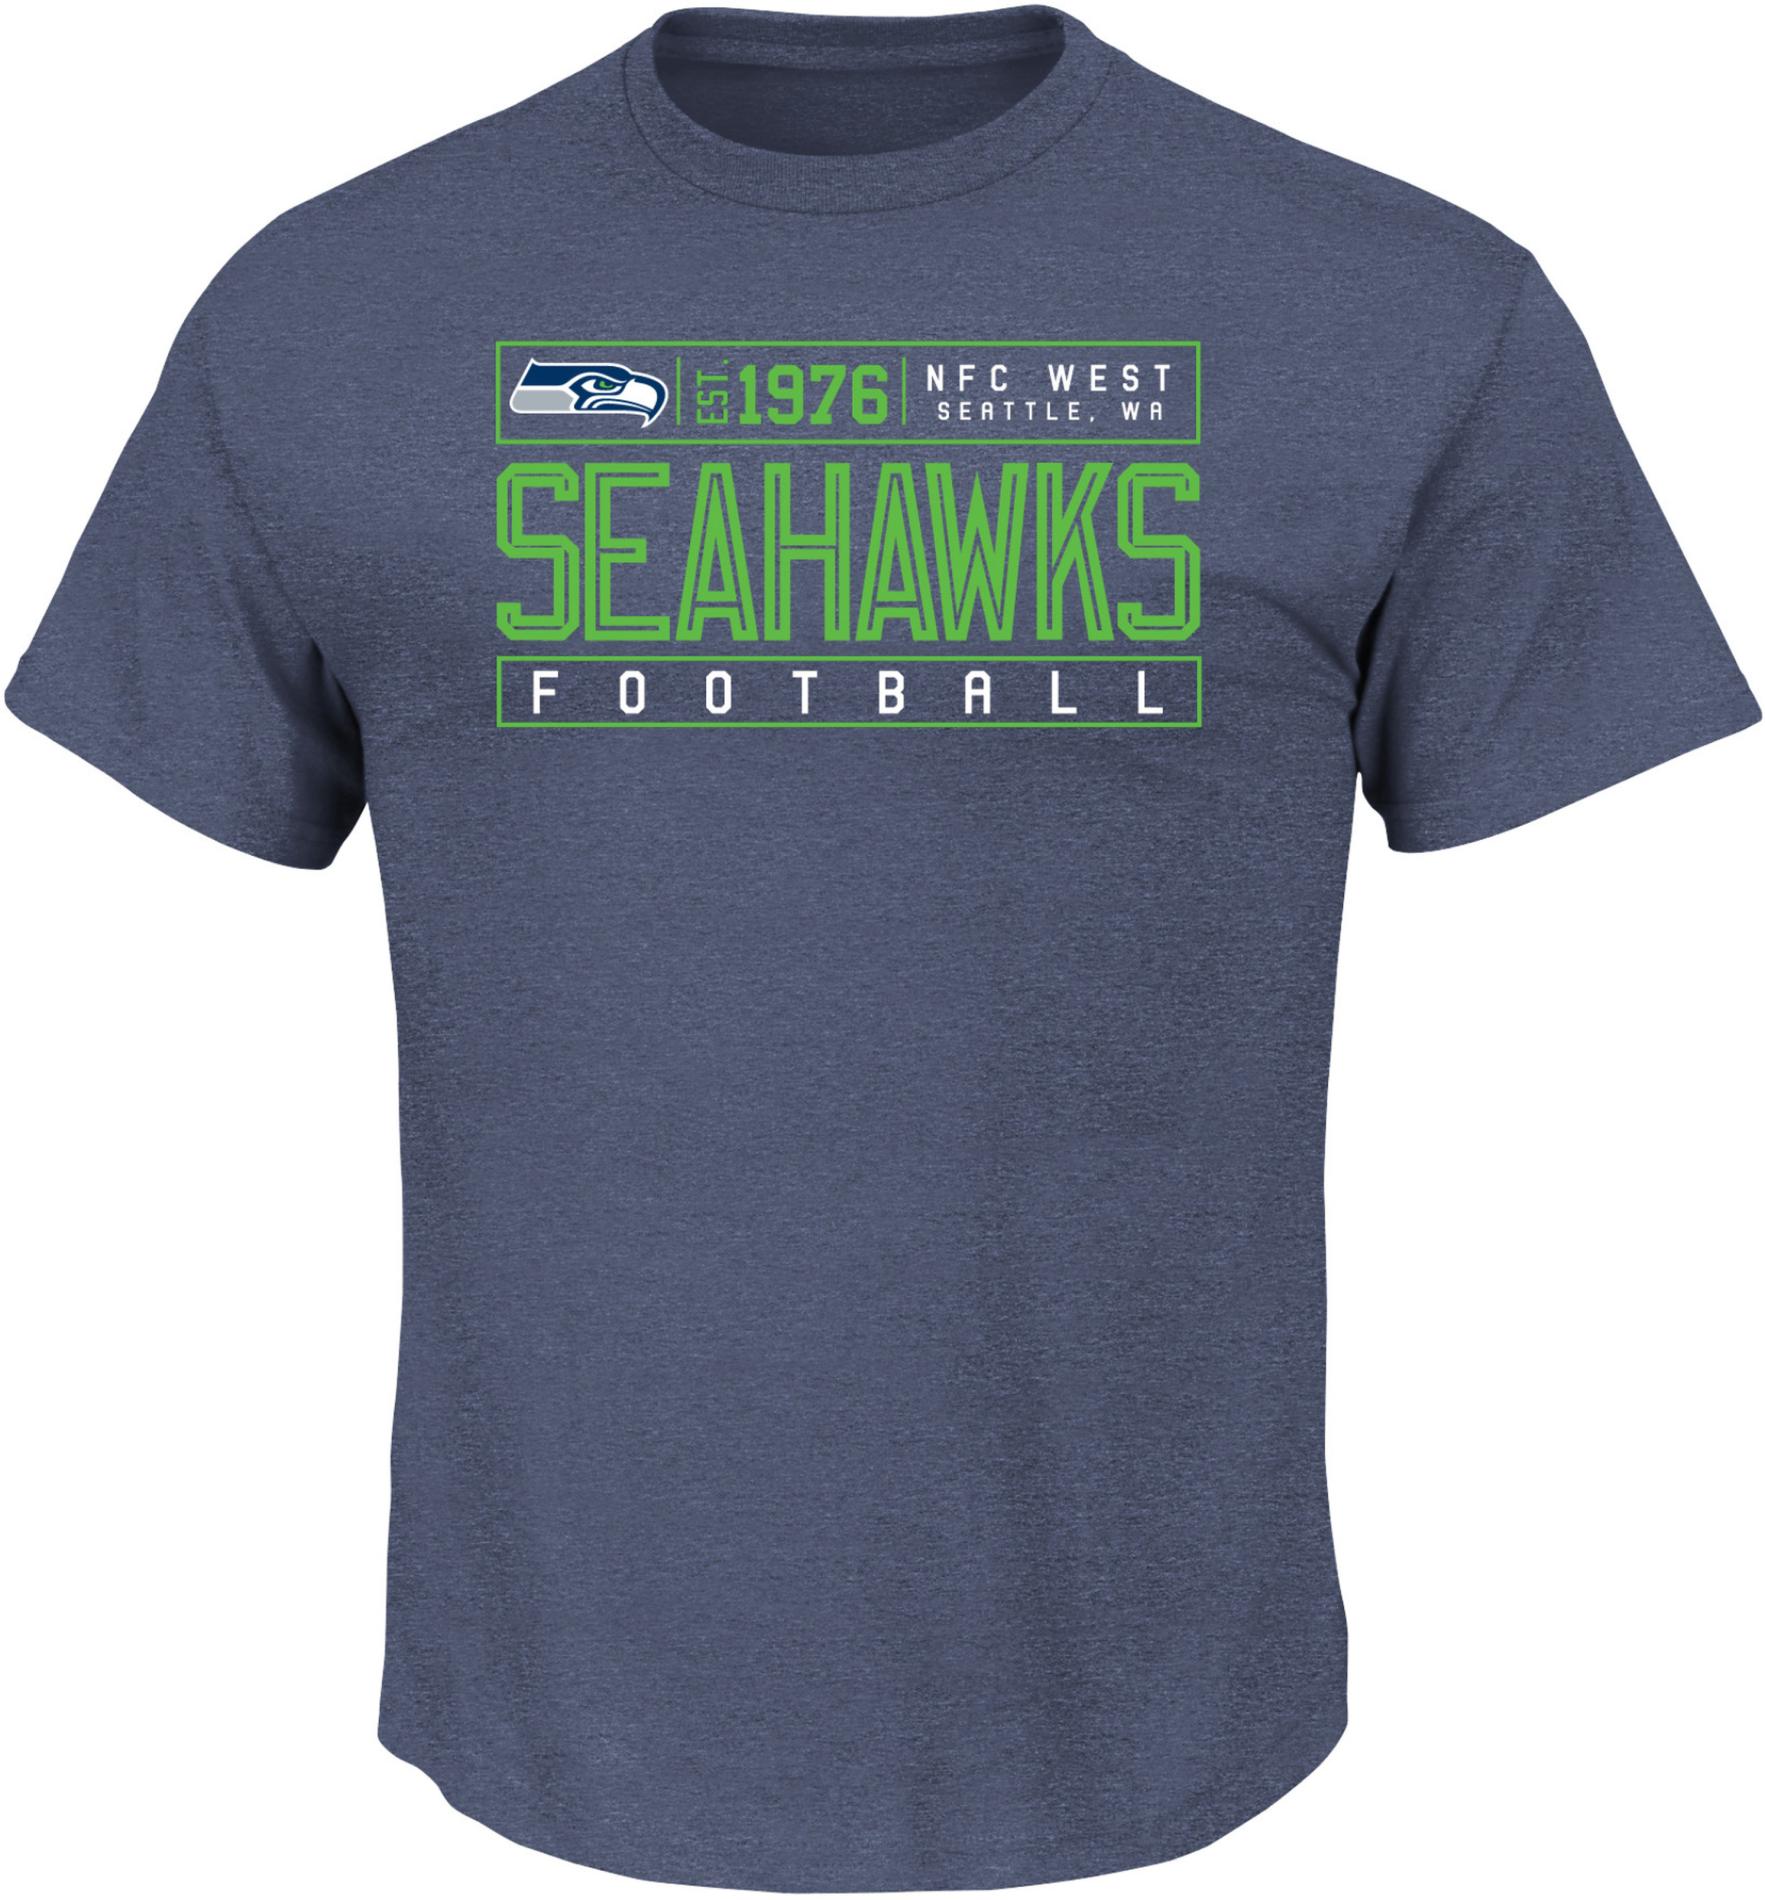 NFL Men's Short-Sleeve T-Shirt - Seattle Seahawks